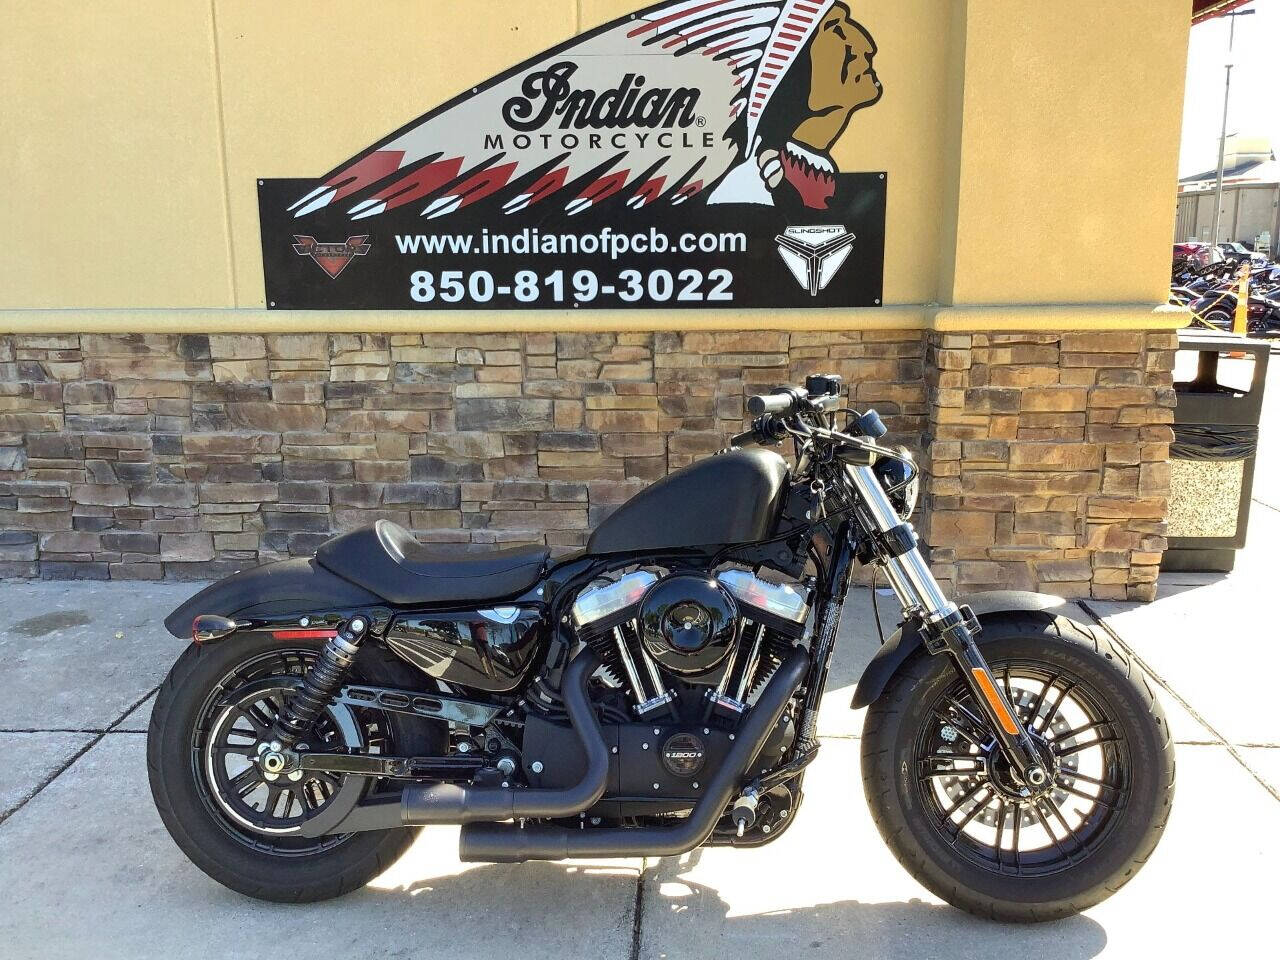 Dealership, Florida  Harley-Davidson of Panama City Beach